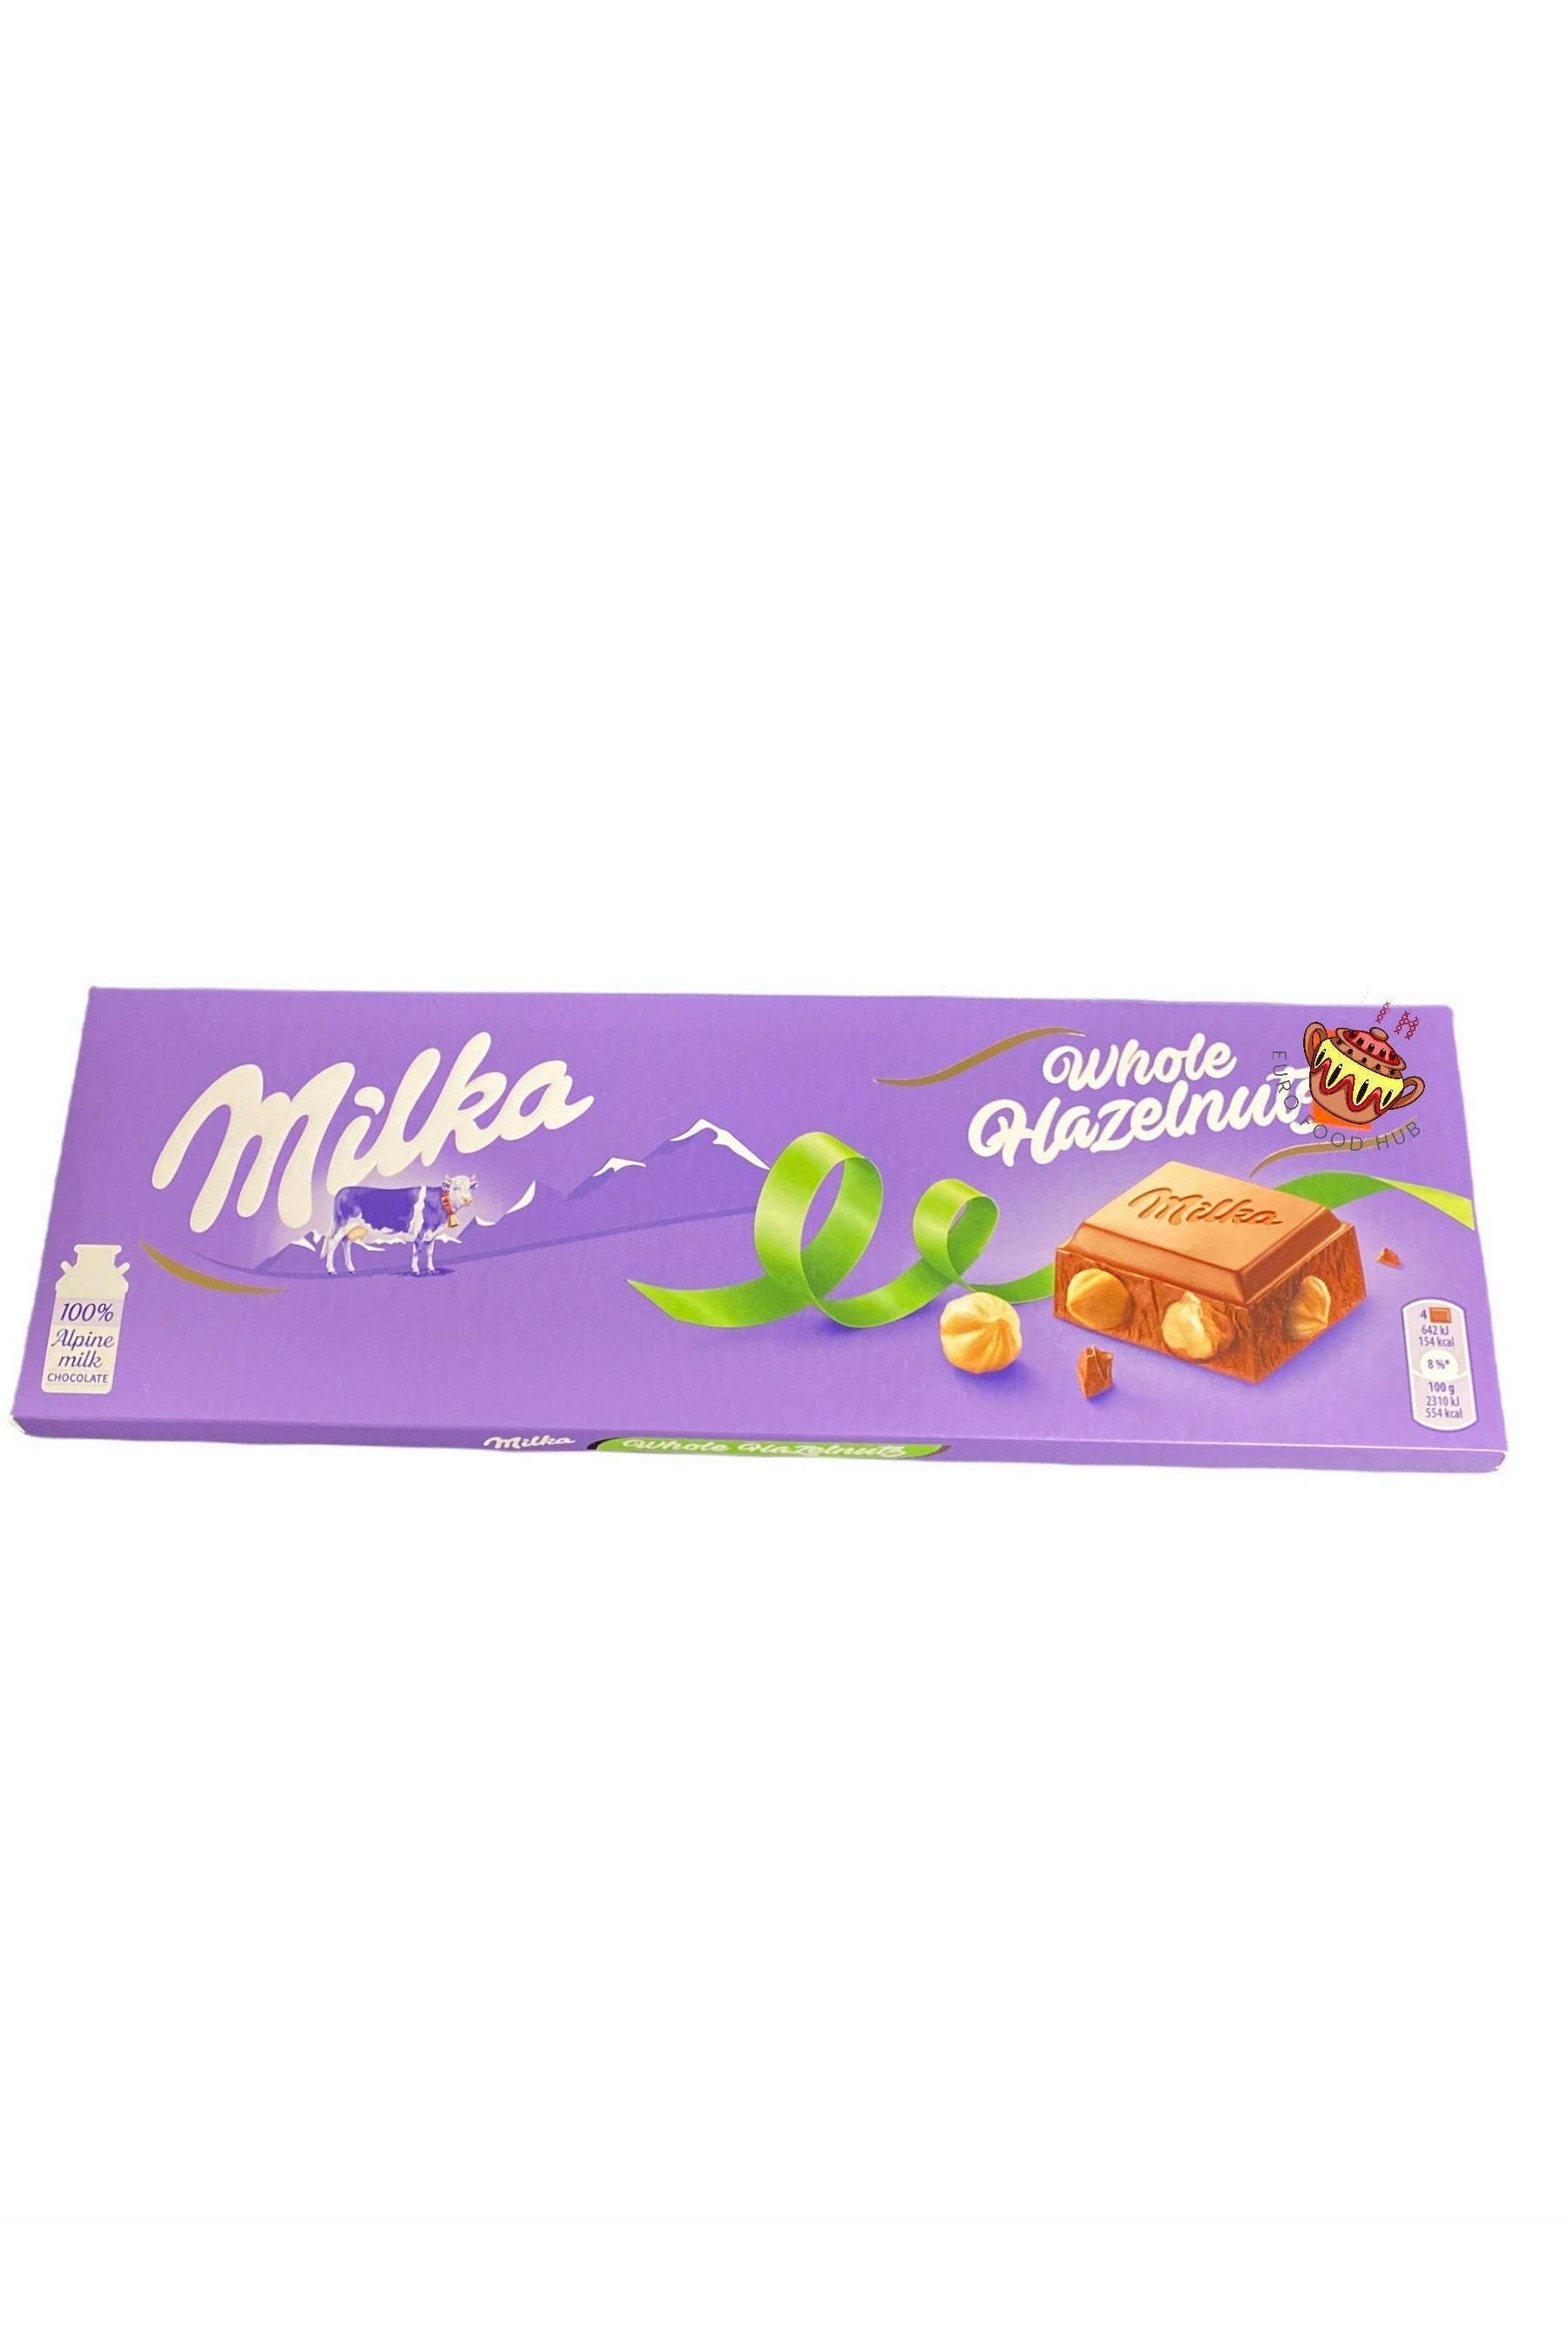 Milka Chocolate - Whole Hazelnuts - 250g